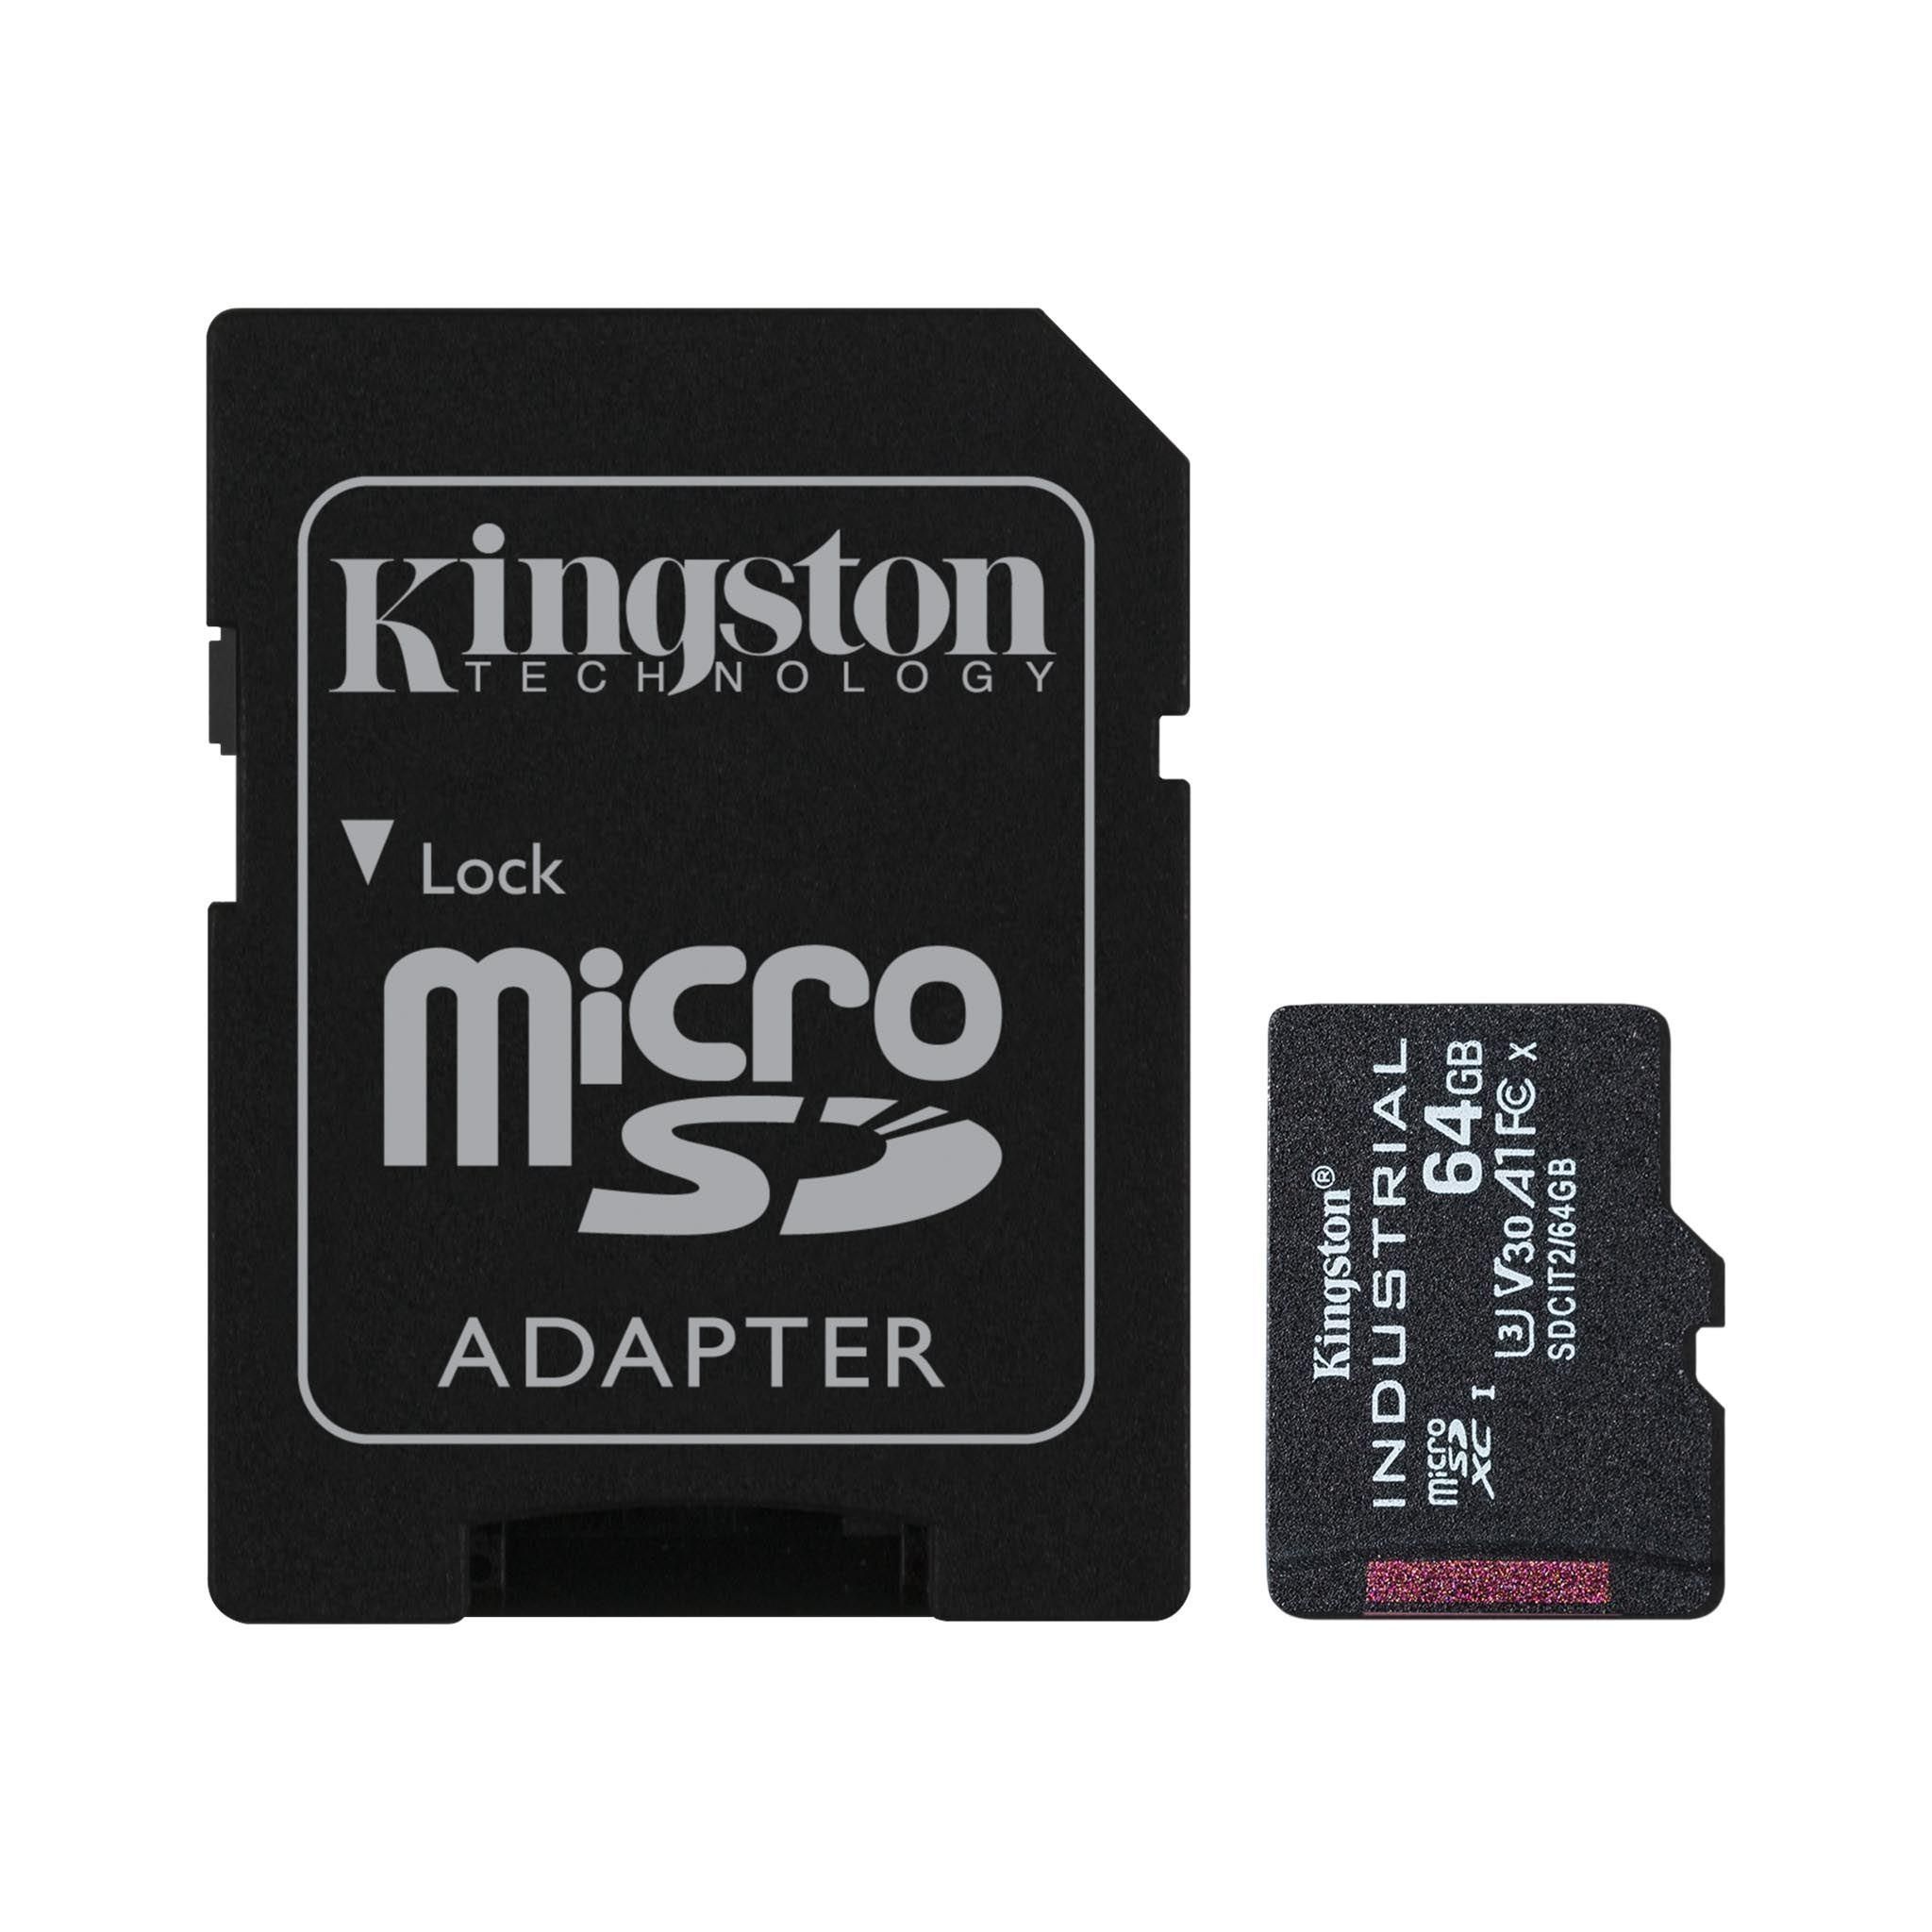 Kingston 64GB MicroSDHC Industrial